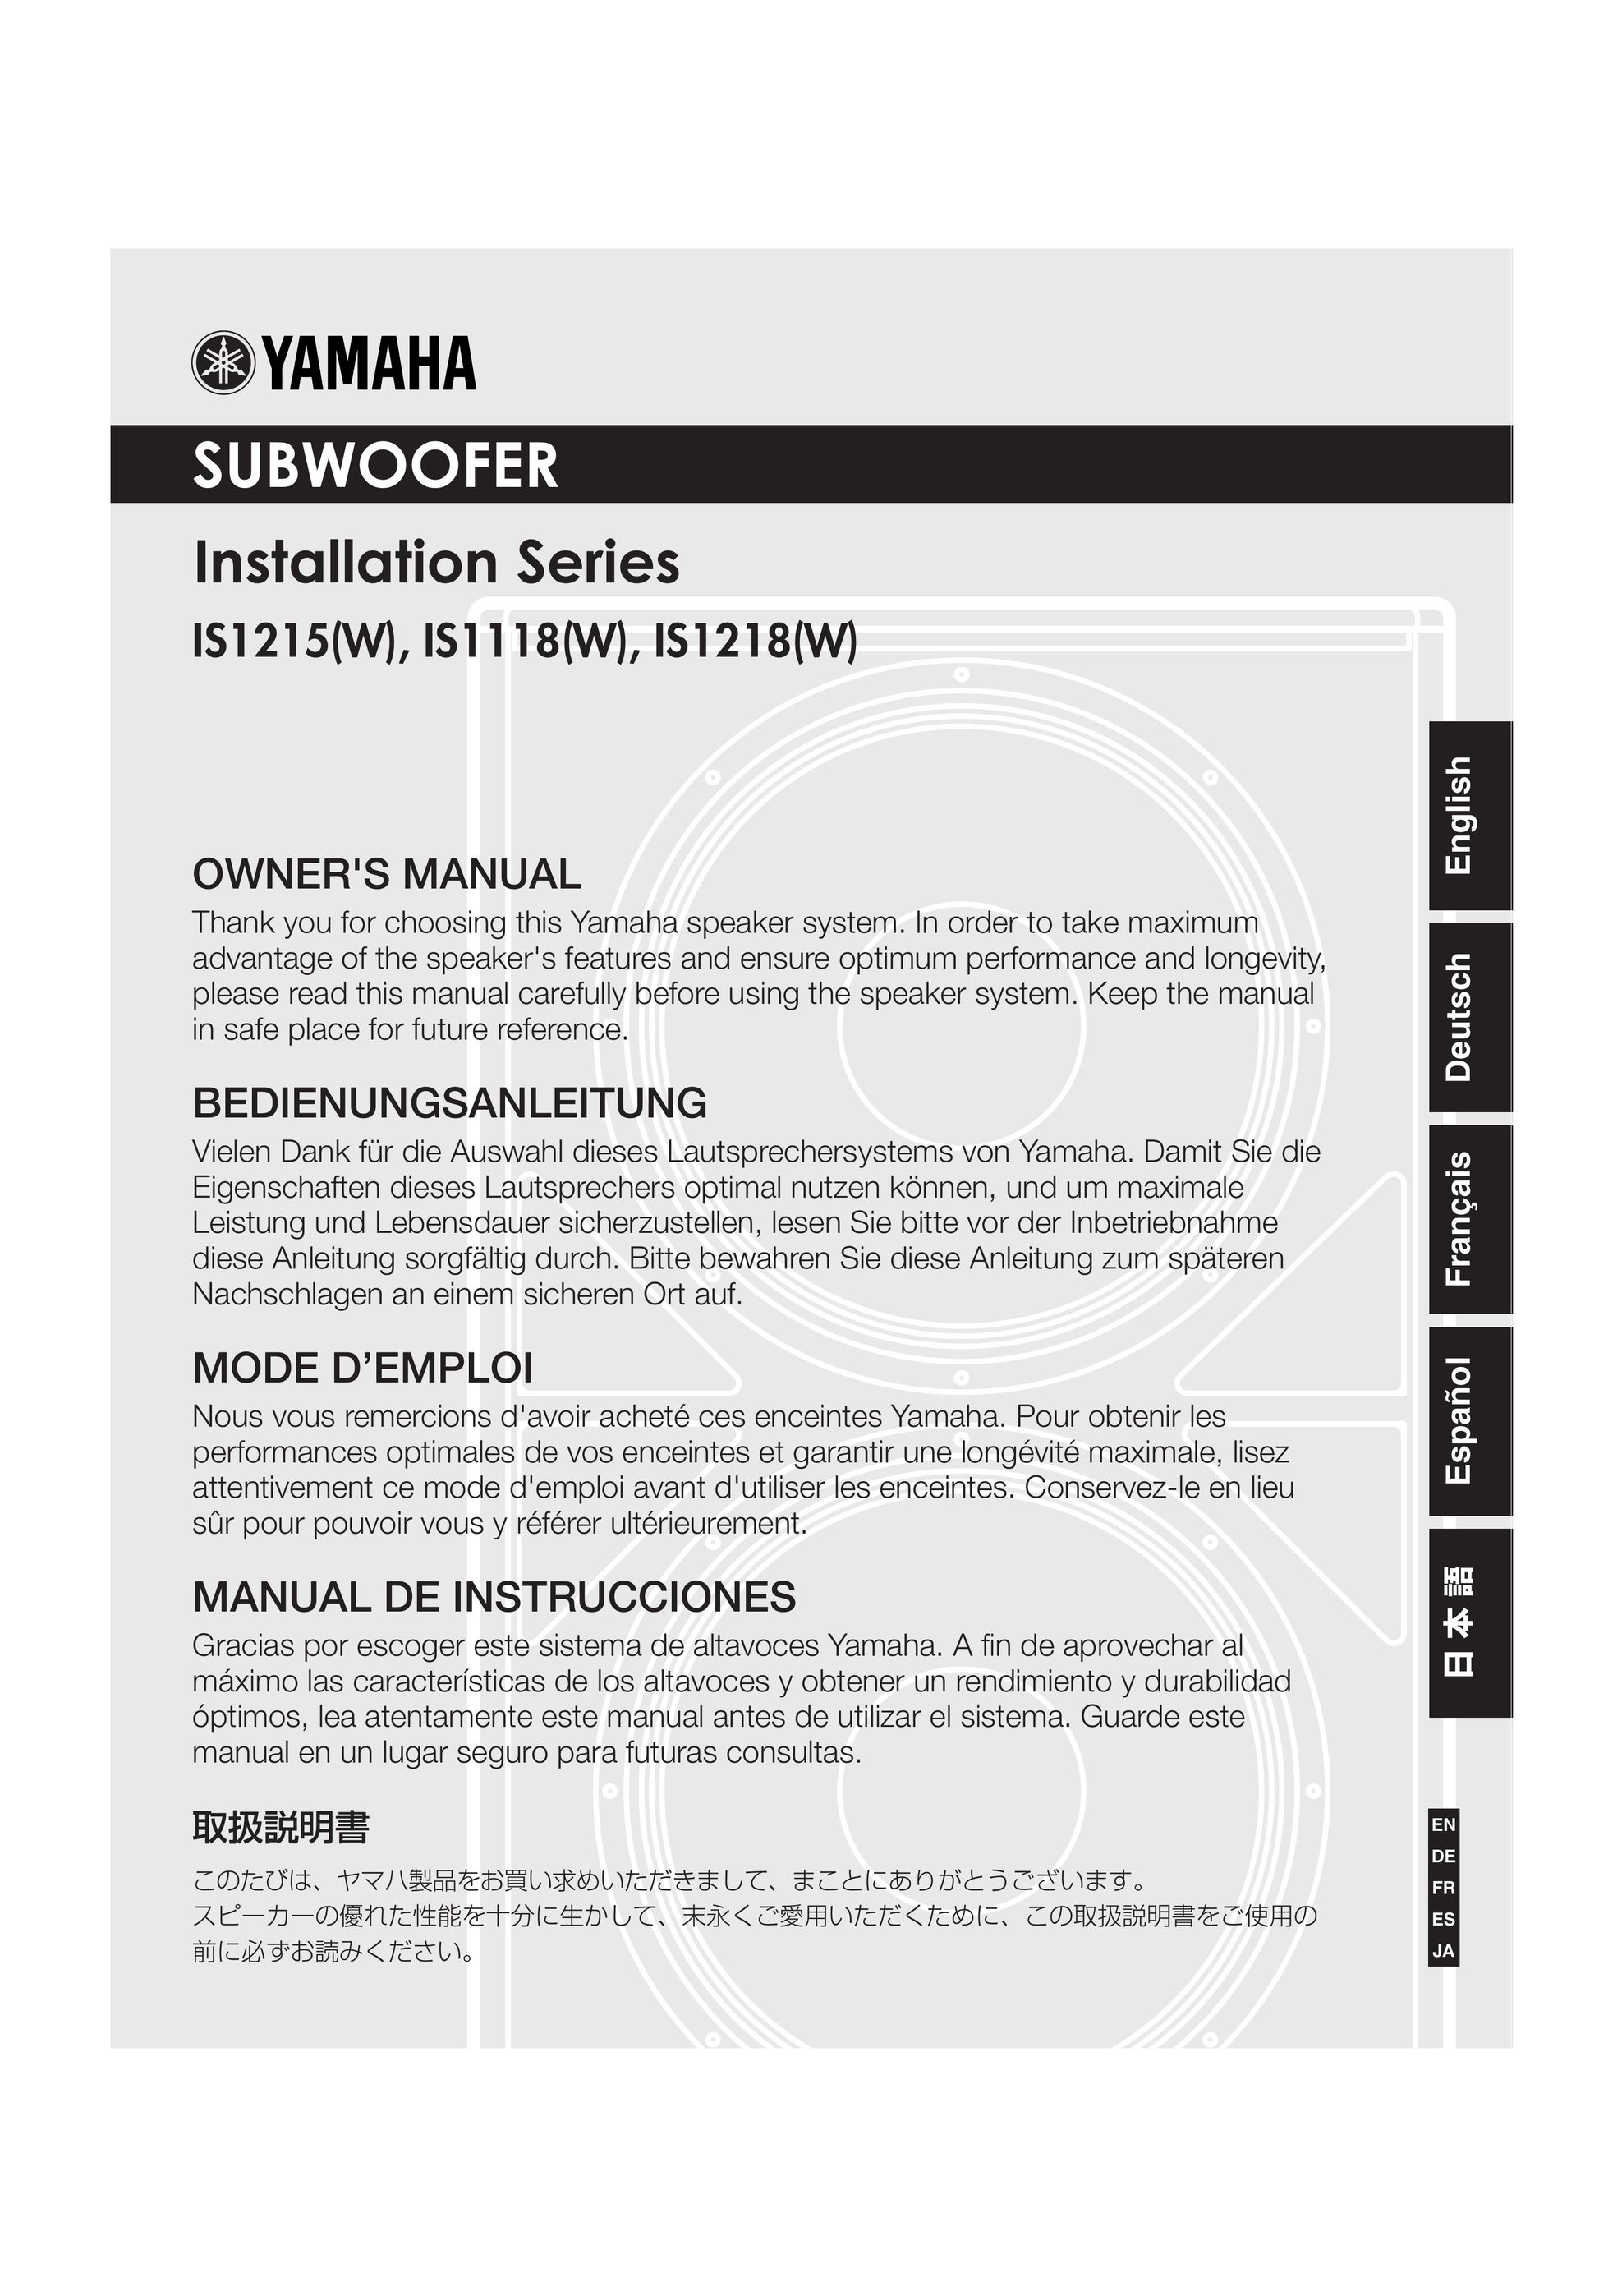 Yamaha IS1218(W) Speaker User Manual